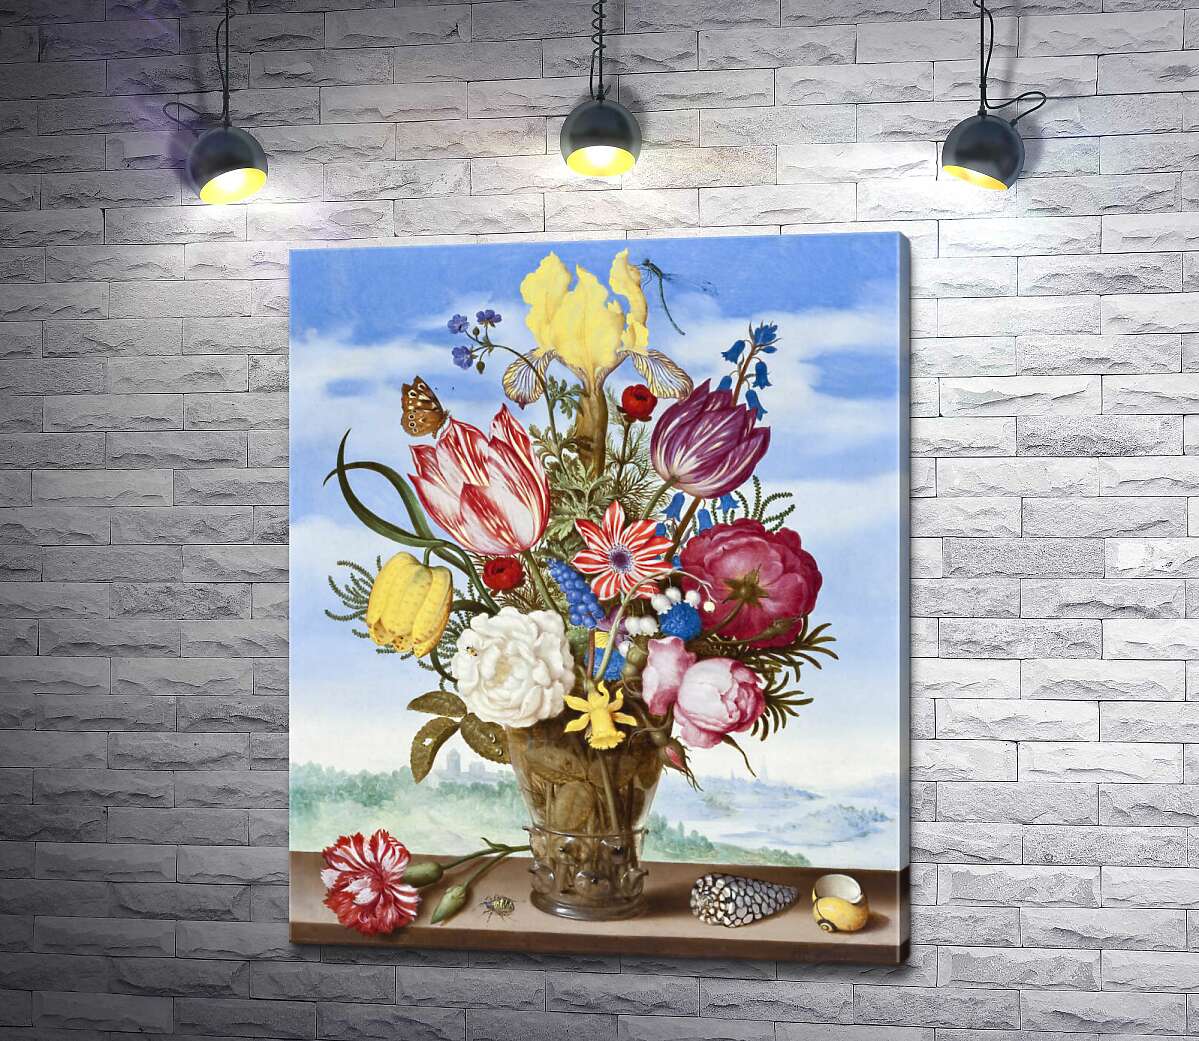 картина Букет квітів на виступі (Bouquet of Flowers on a Ledge) - Амброзіус Босгарт Старший (Ambrosius Bosschaert the Elder)